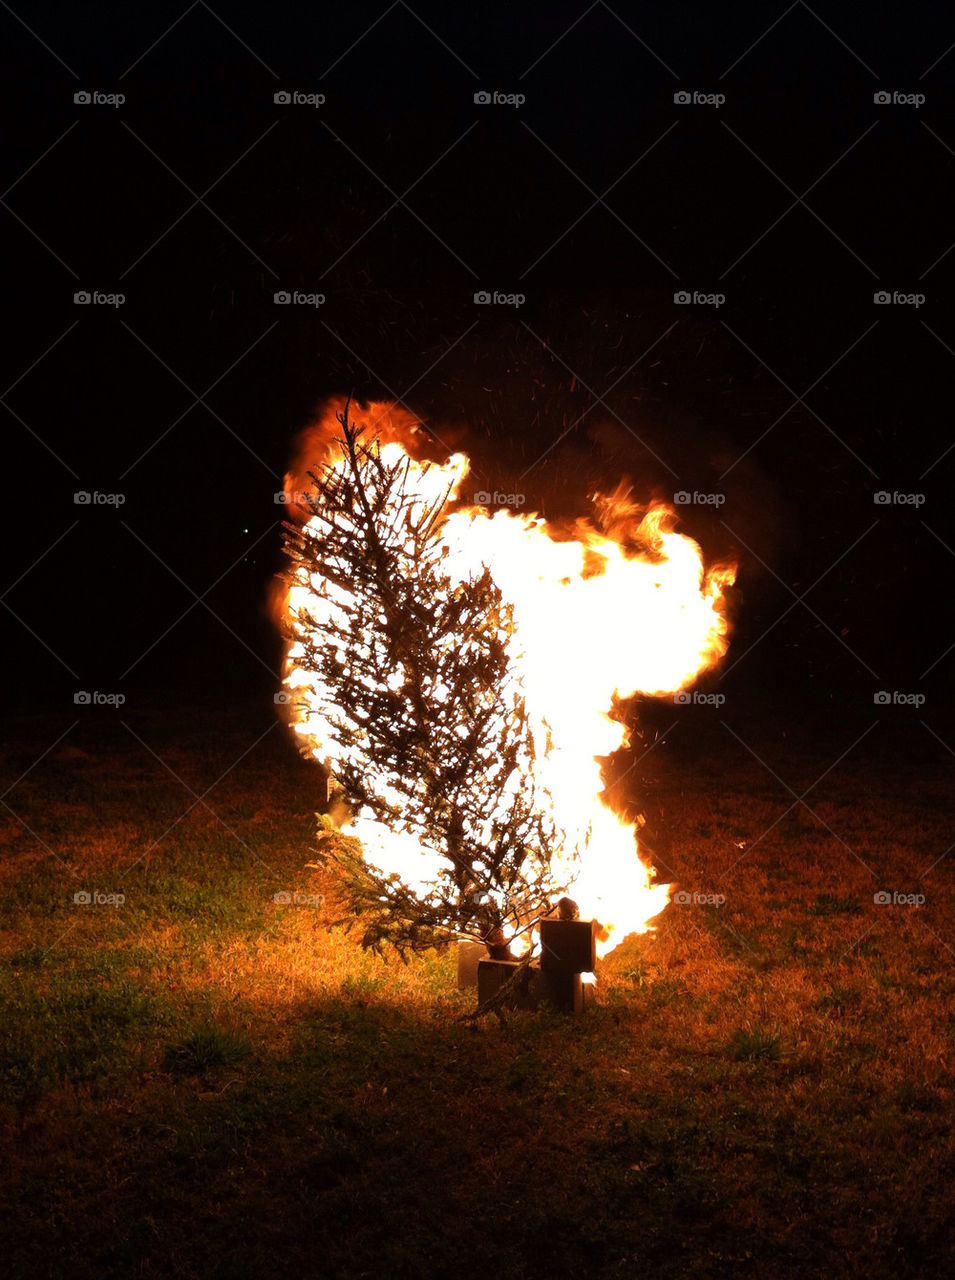 tree fire night flames by wmm1969